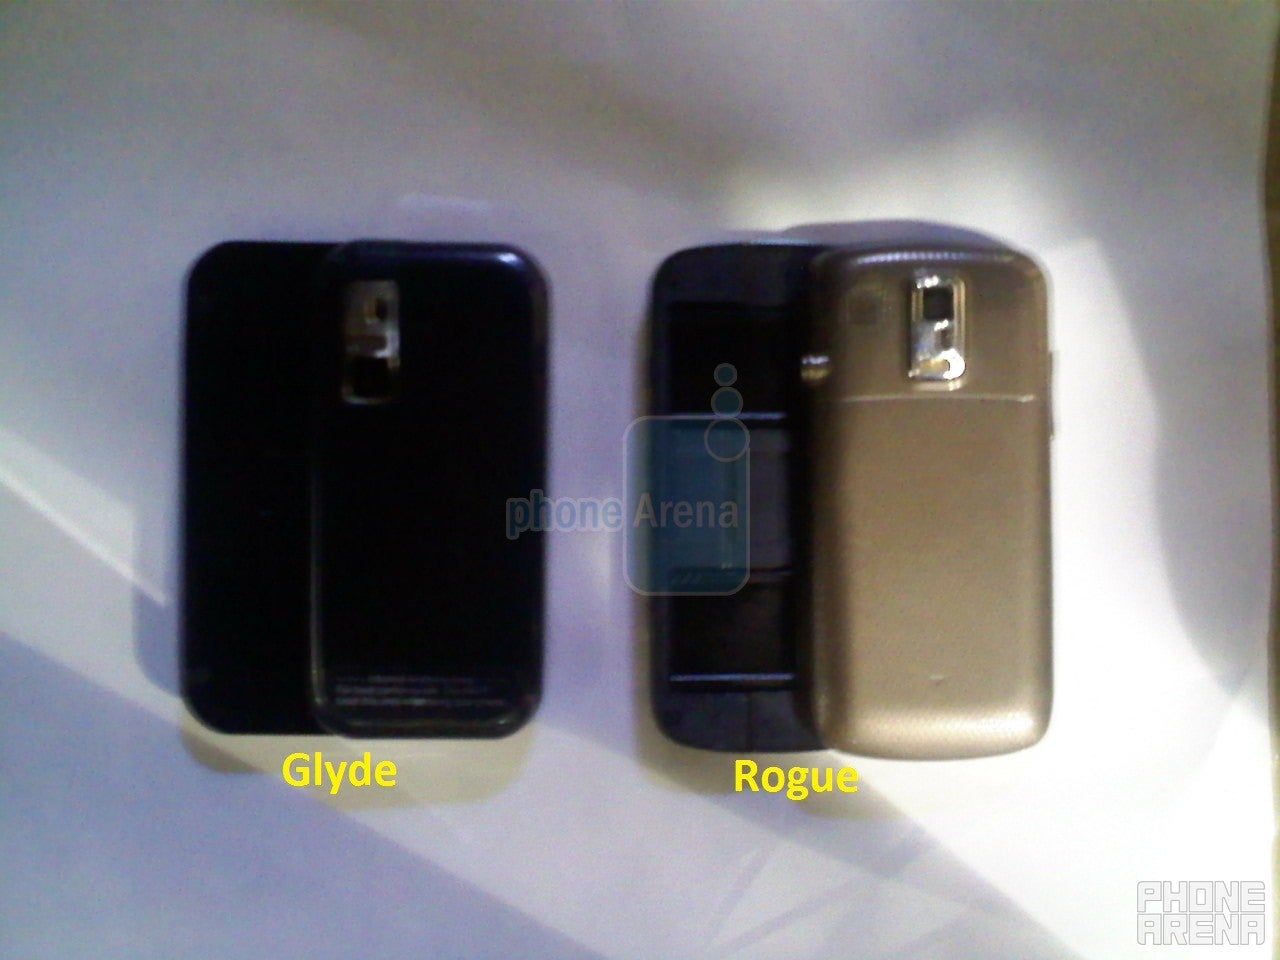 Spy pics of the new Samsung Rogue U960 for Verizon